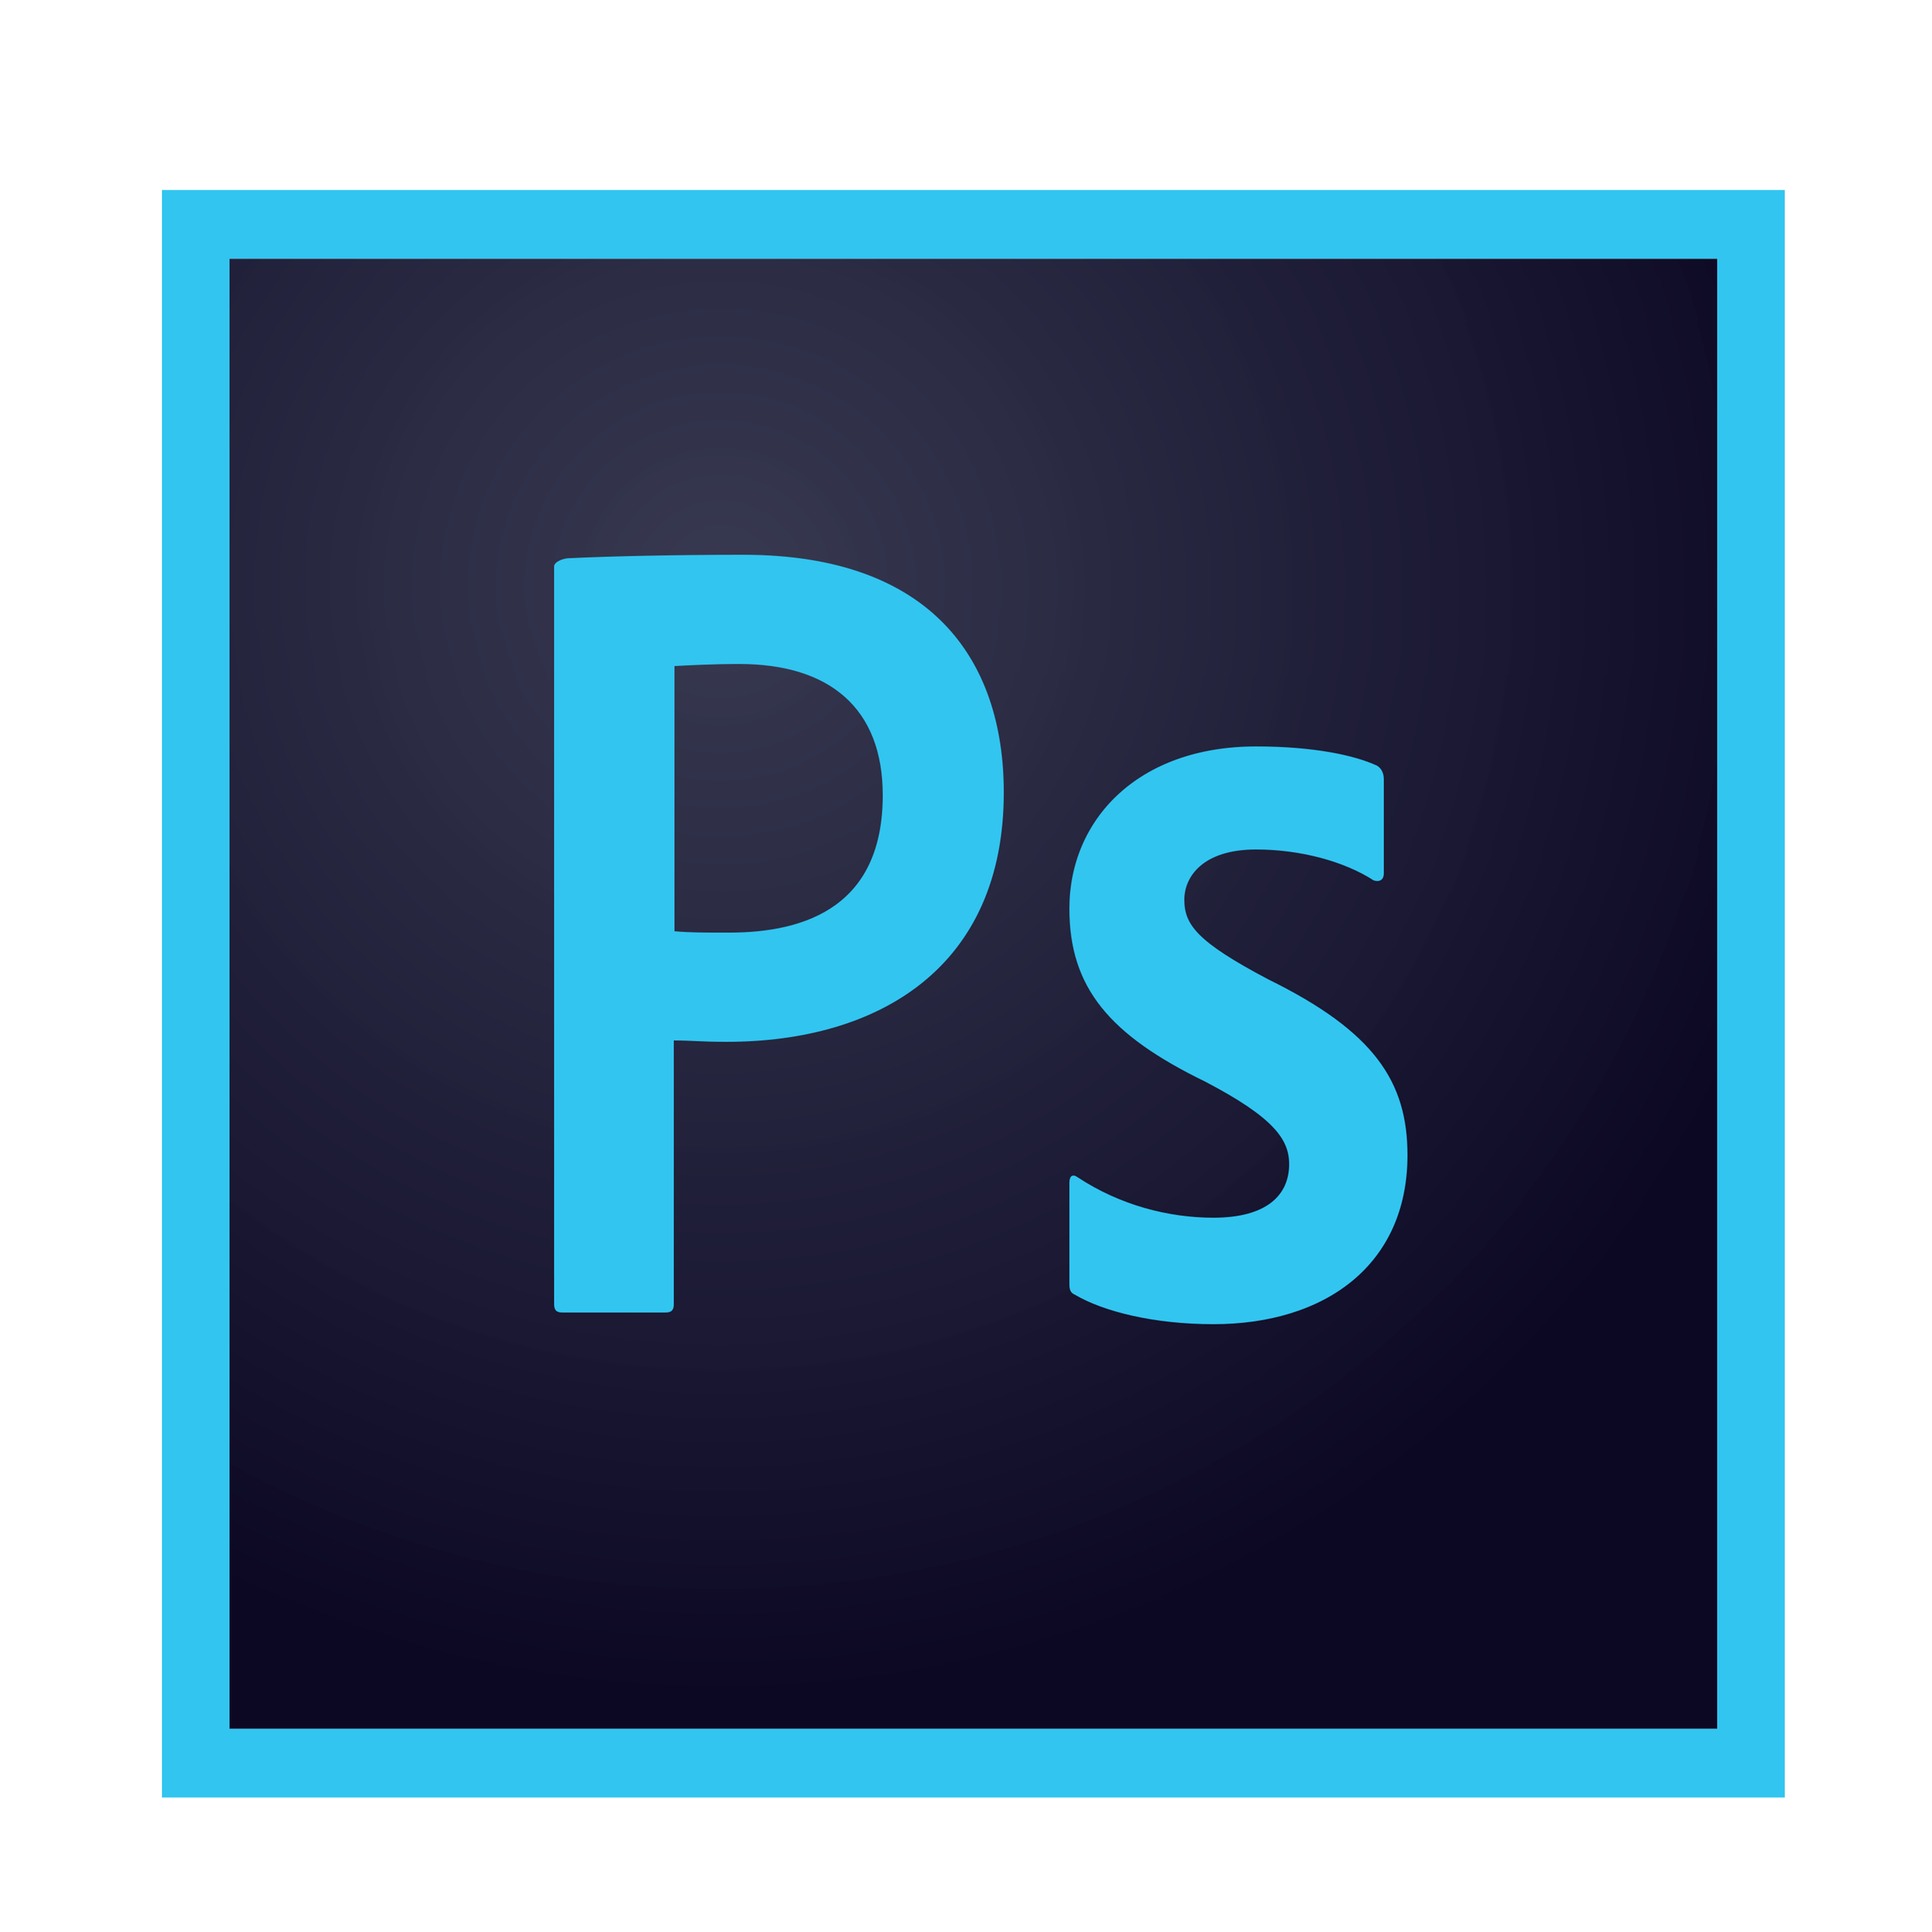 An icon representing Adobe Photoshop